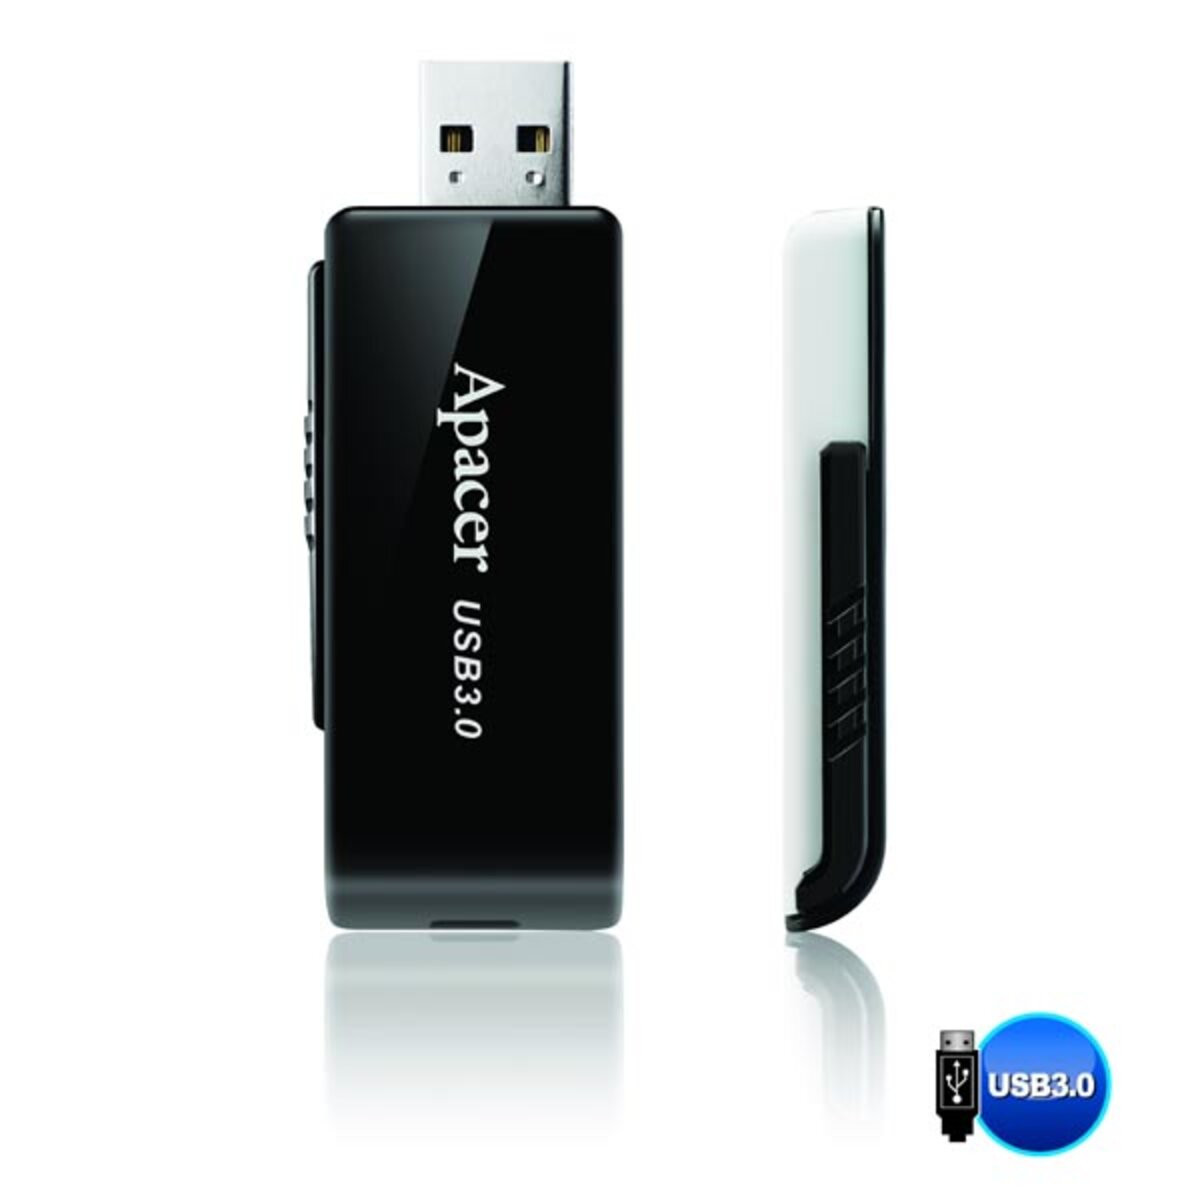 Flash Apacer USB 3.1 AH350 32Gb black - 4